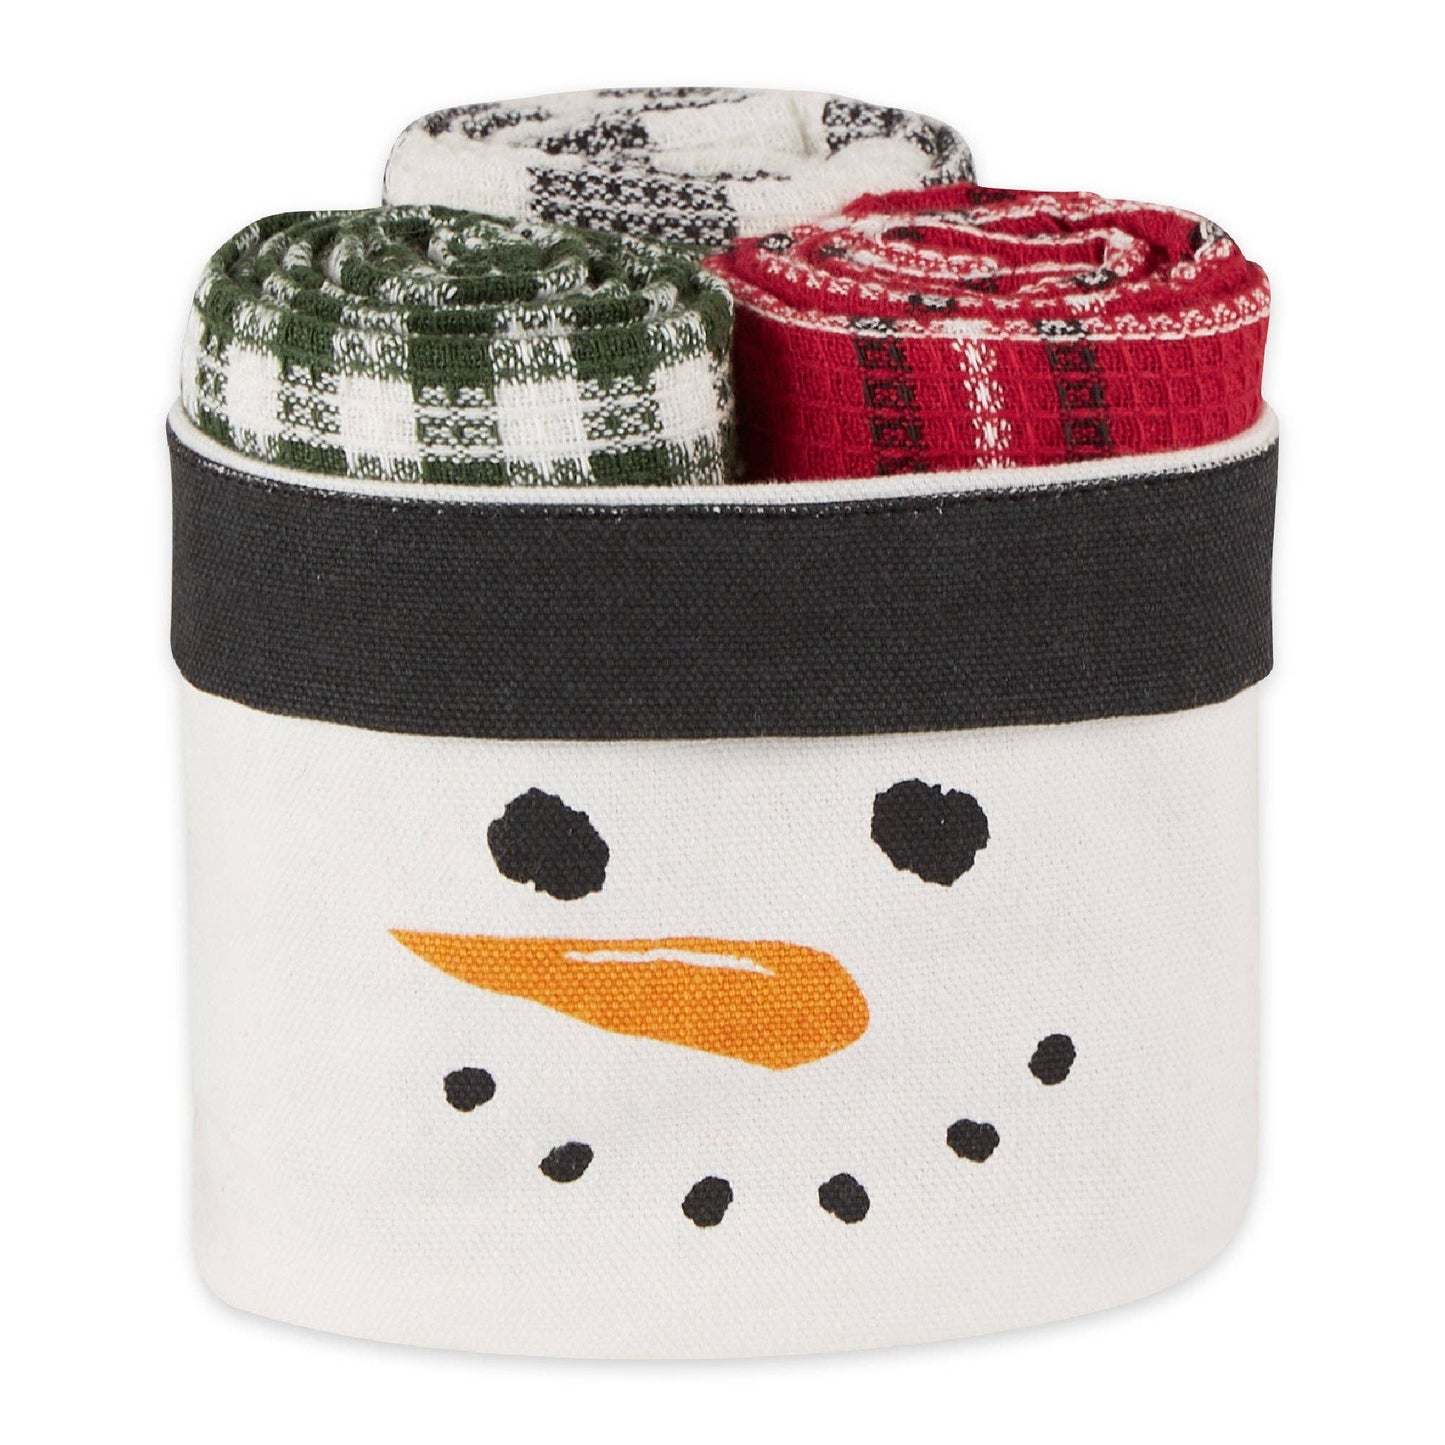 Snowman Kitchen Gift Set